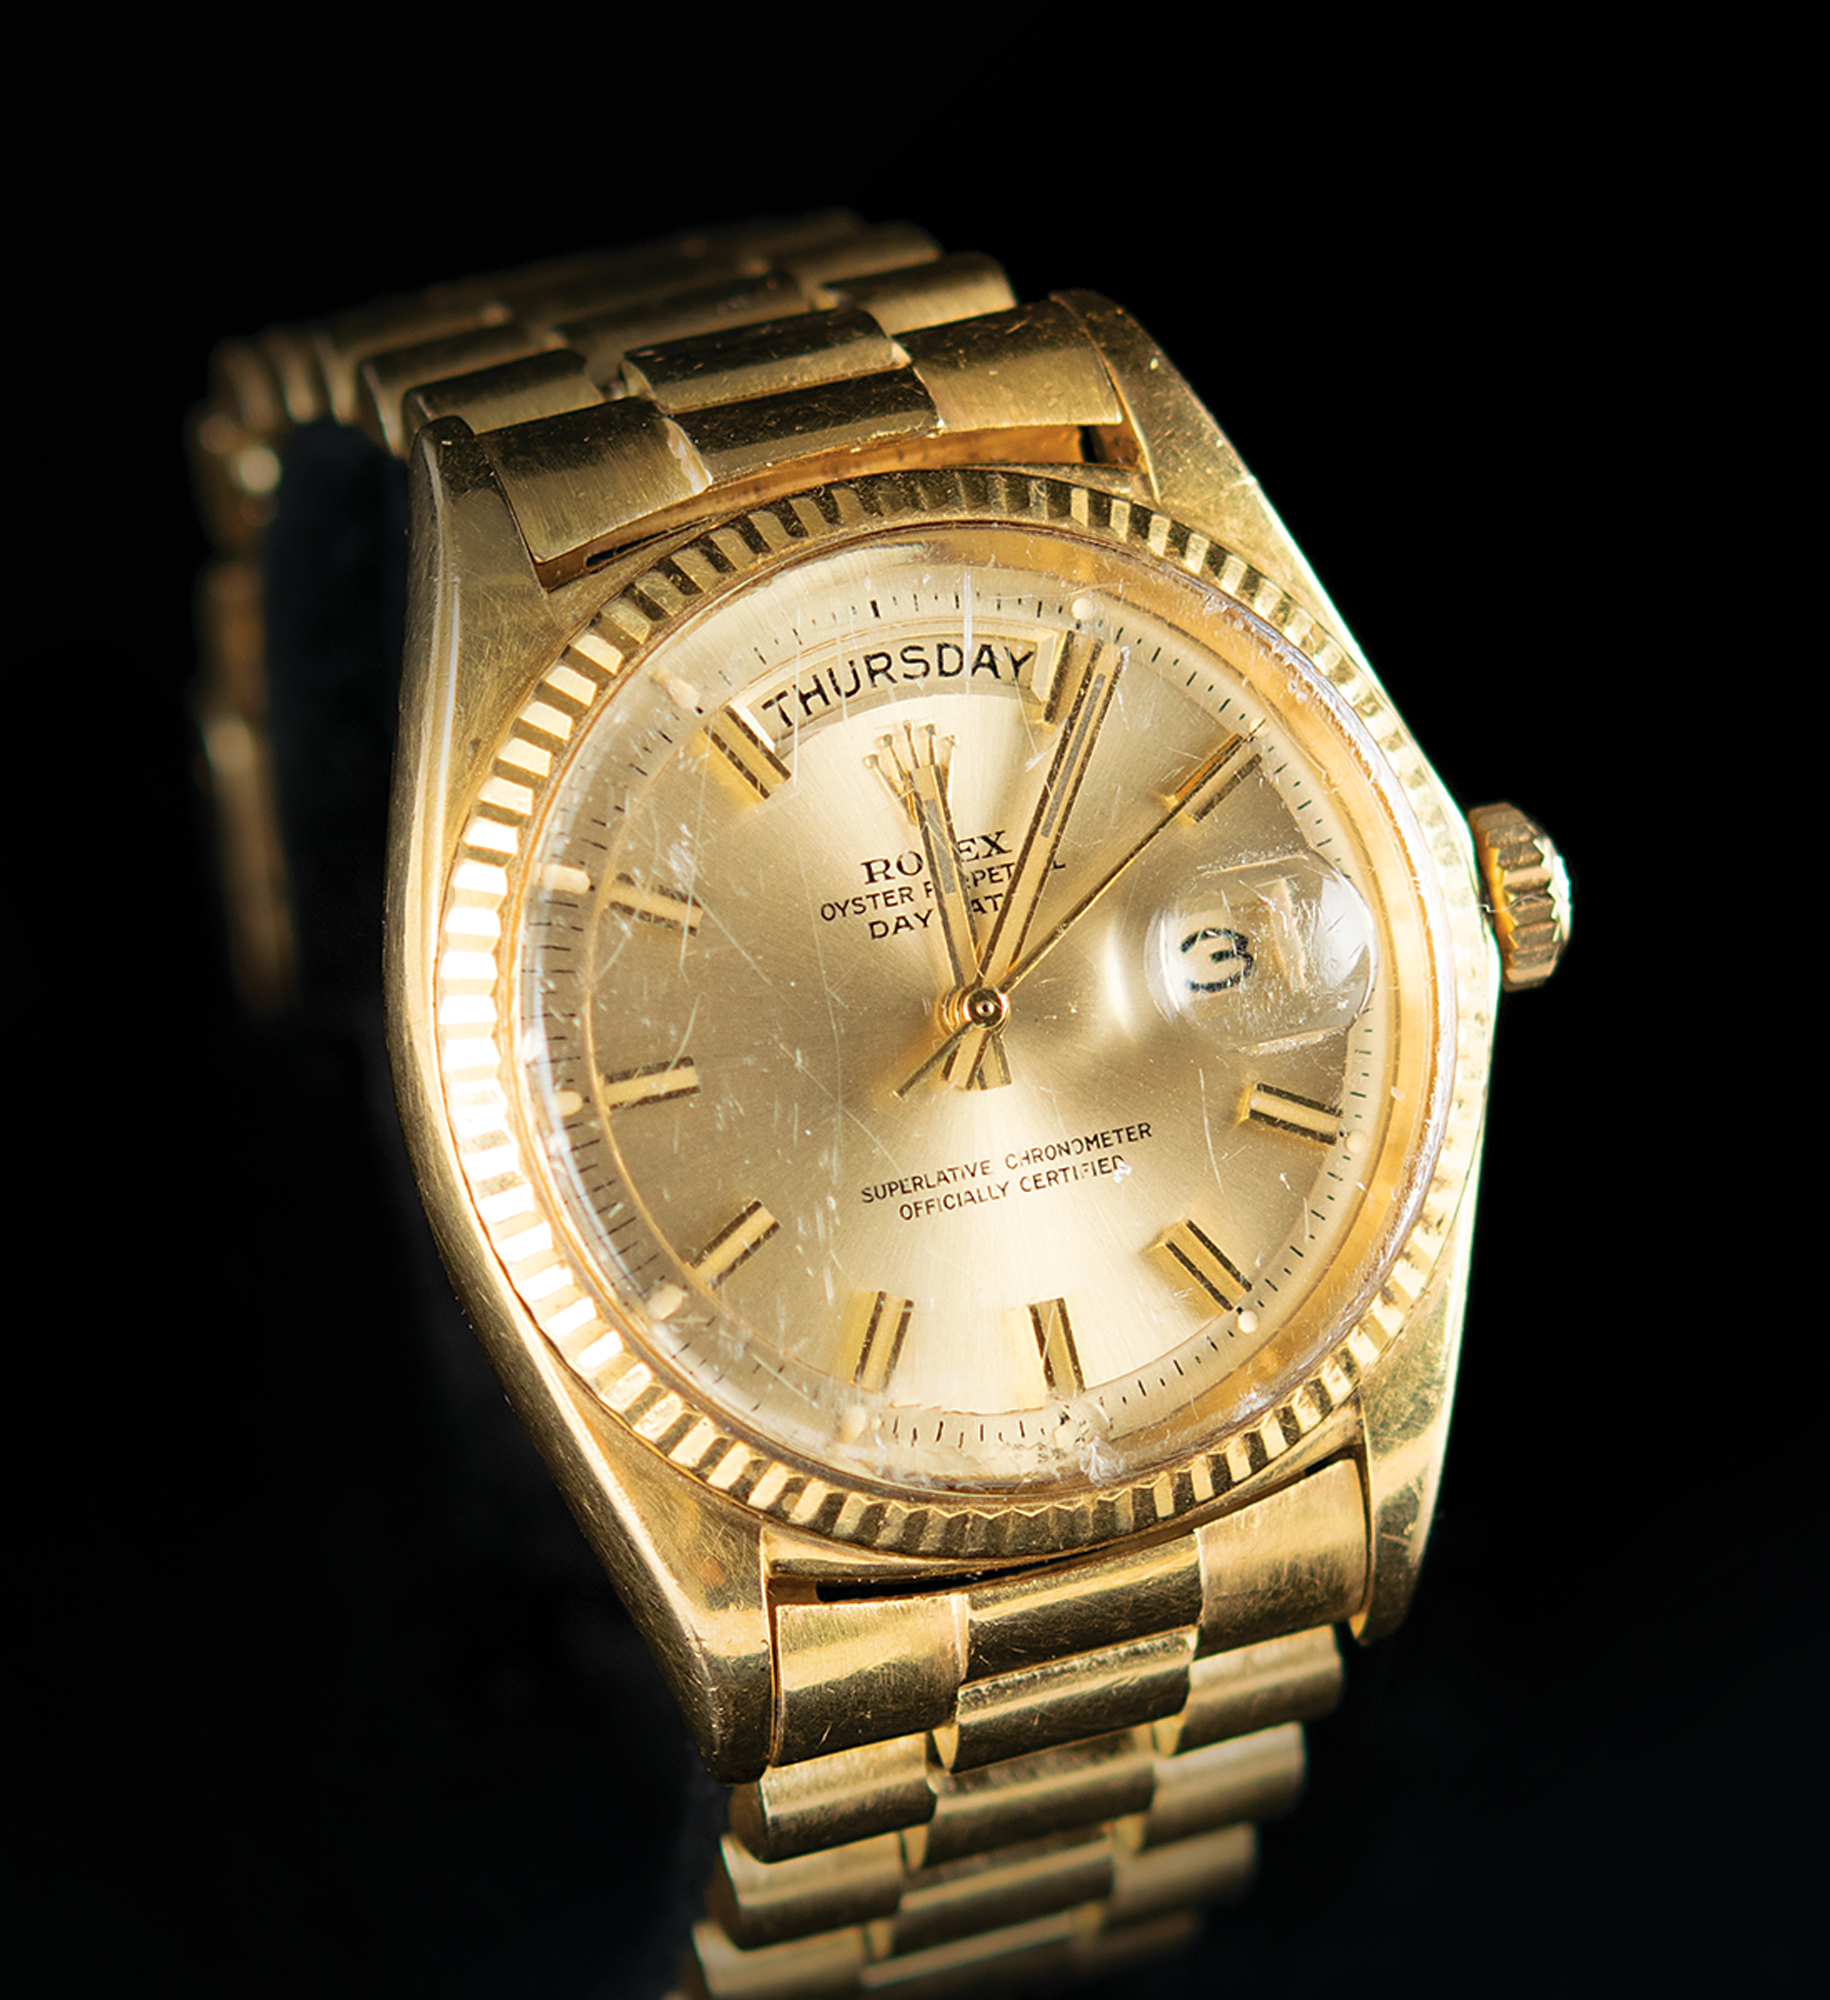 Lot #9004 Richard Gordon's 18K Gold Rolex President Day-Date Watch